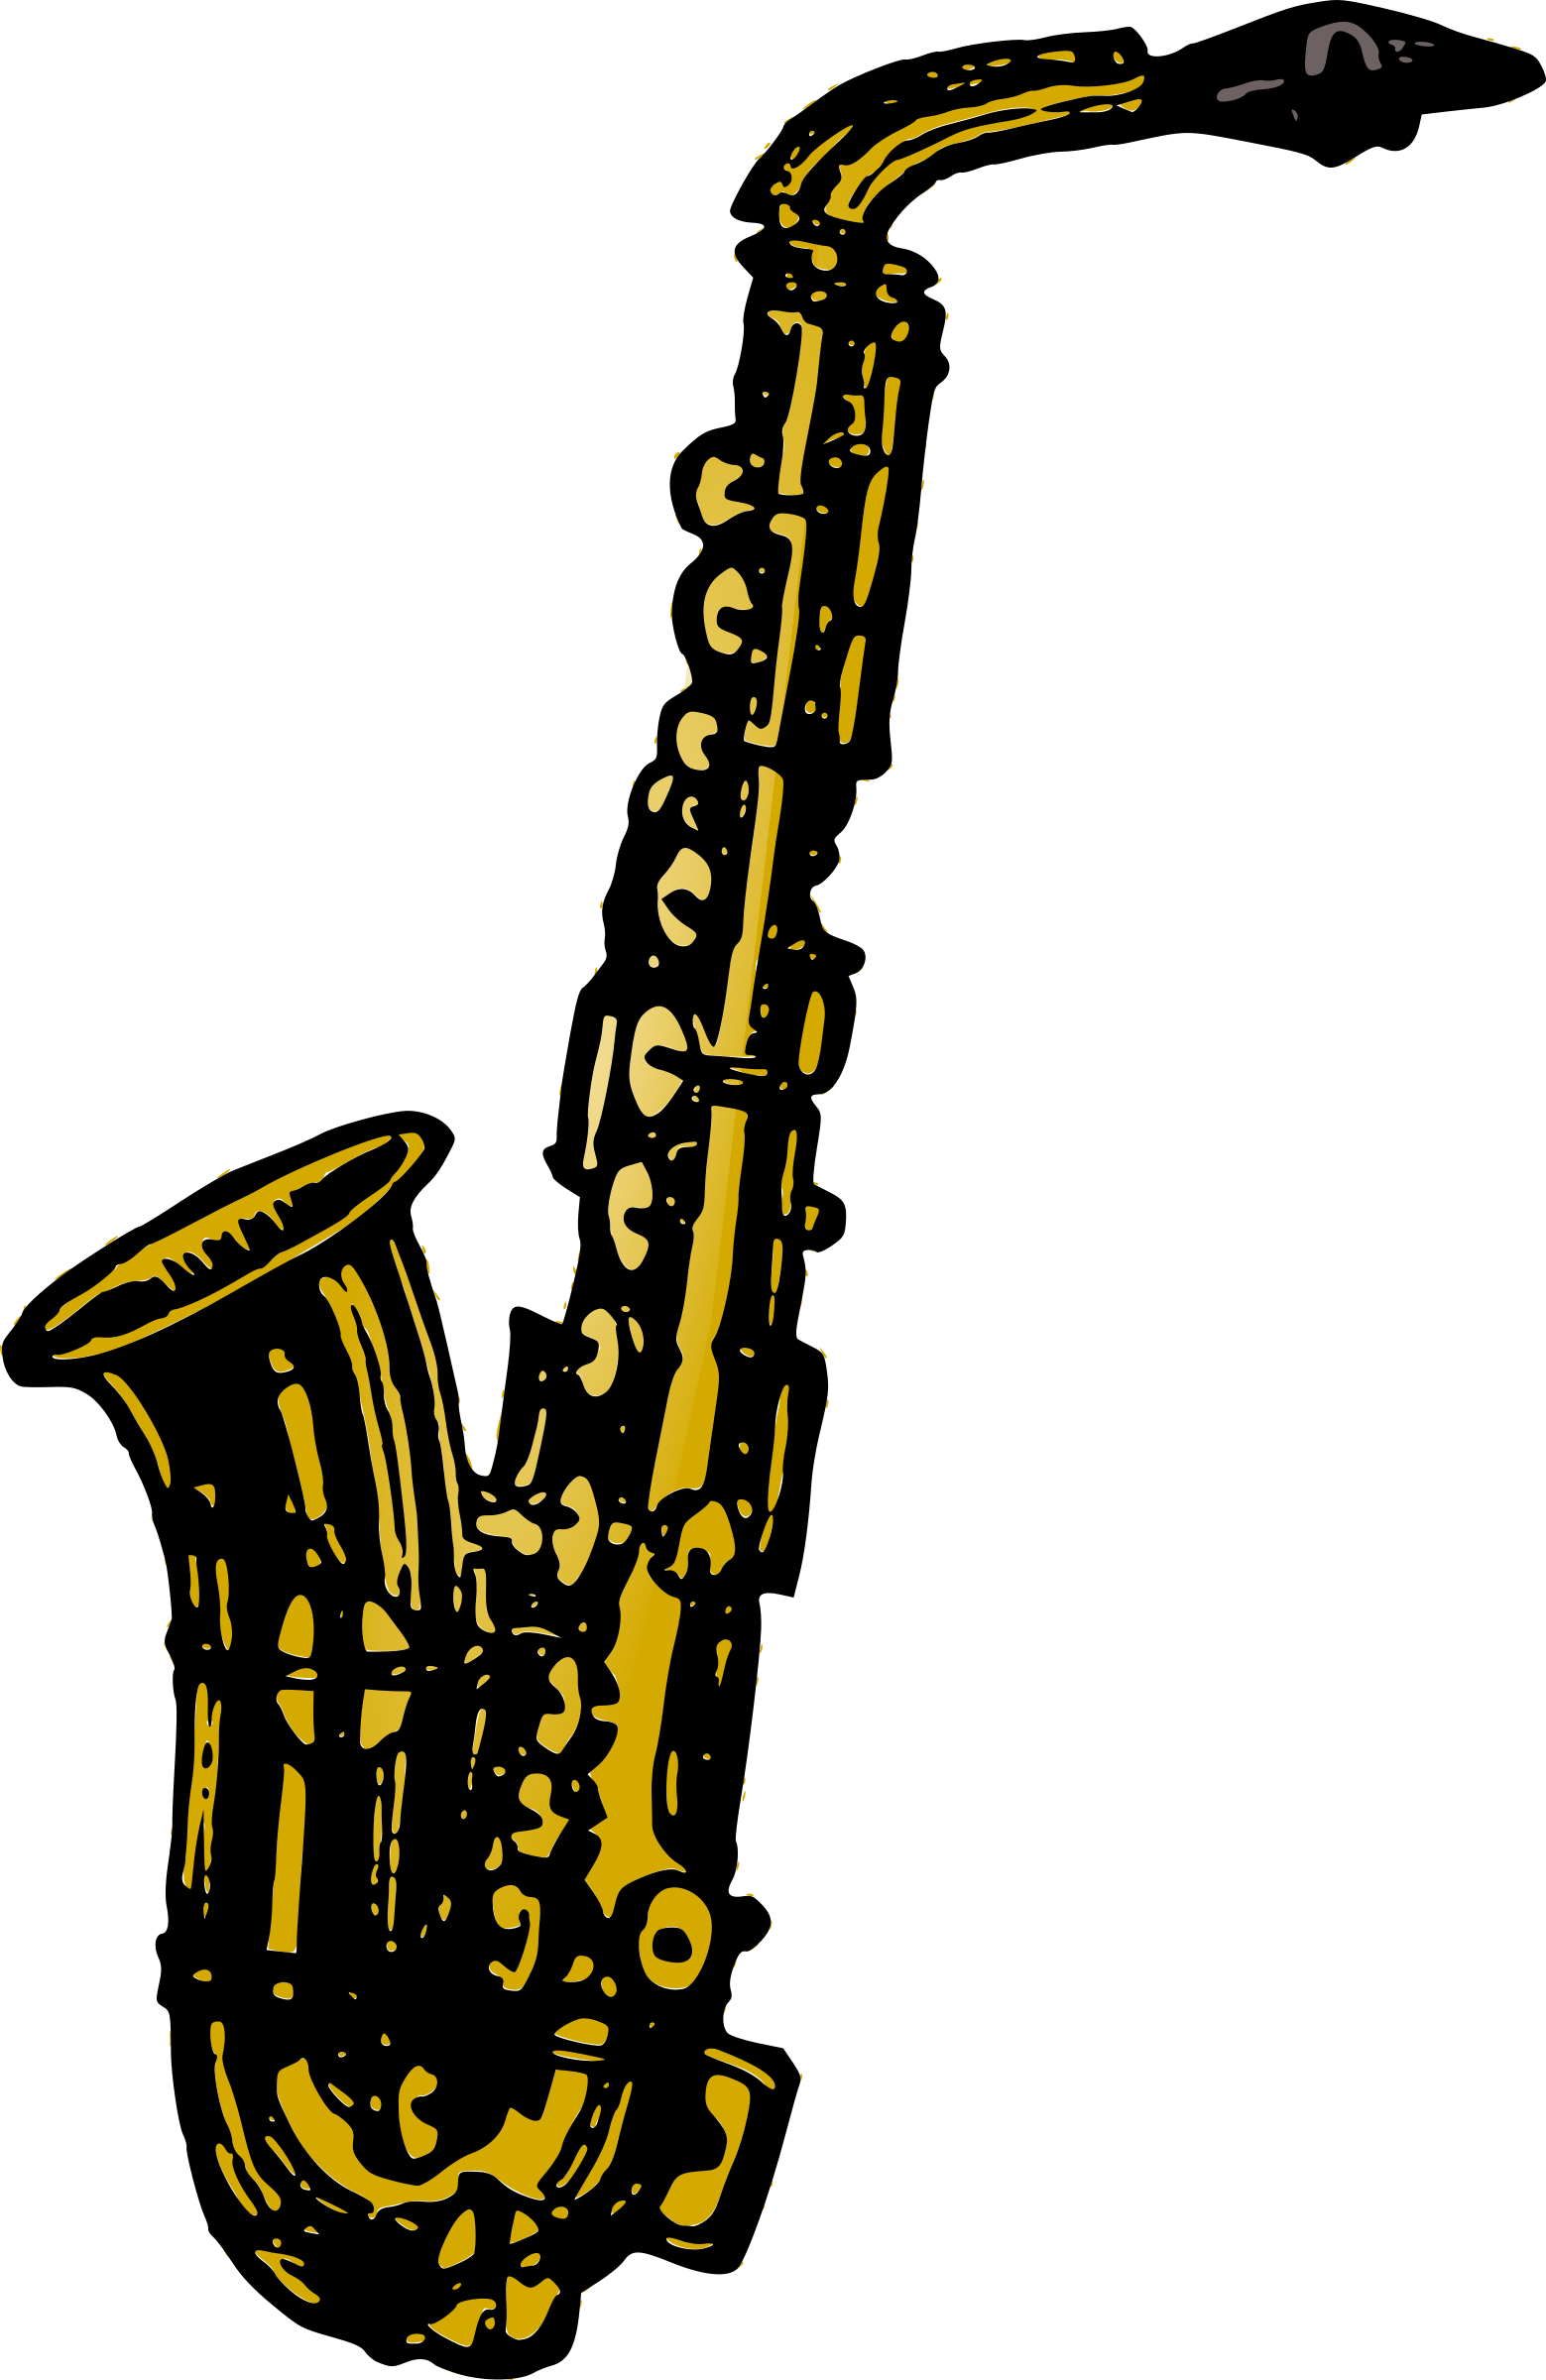 Saxophone tutorials download free